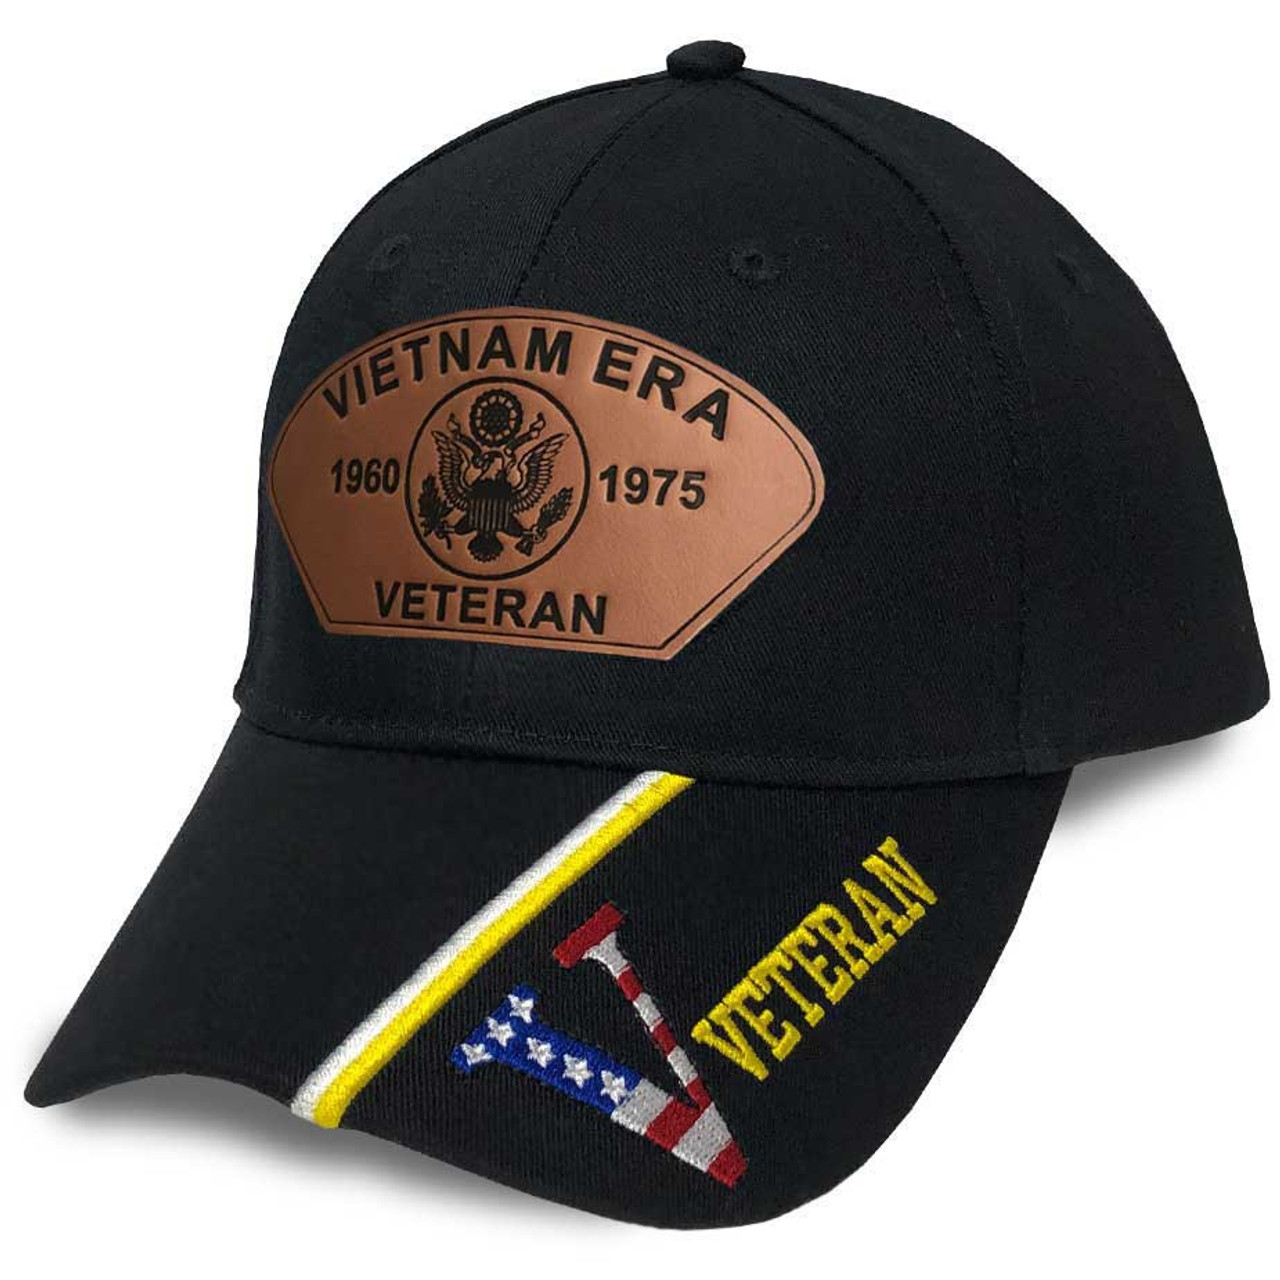 Vietnam Era Veteran Hat with Custom Leather Patch and V Veteran Text